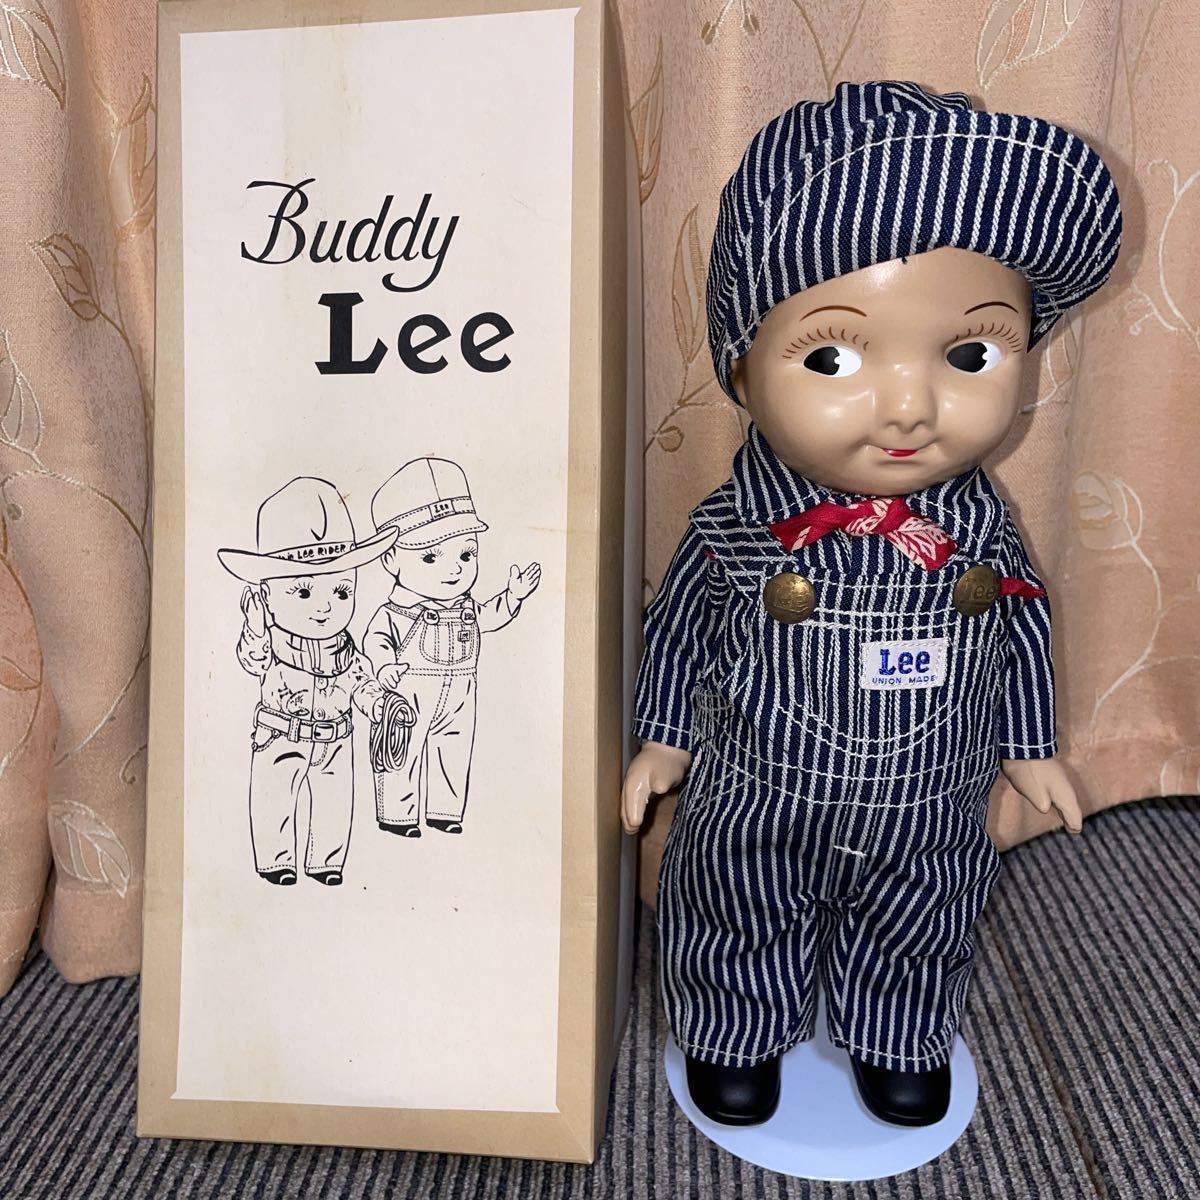 Yahoo!オークション -「buddy lee 人形」の落札相場・落札価格